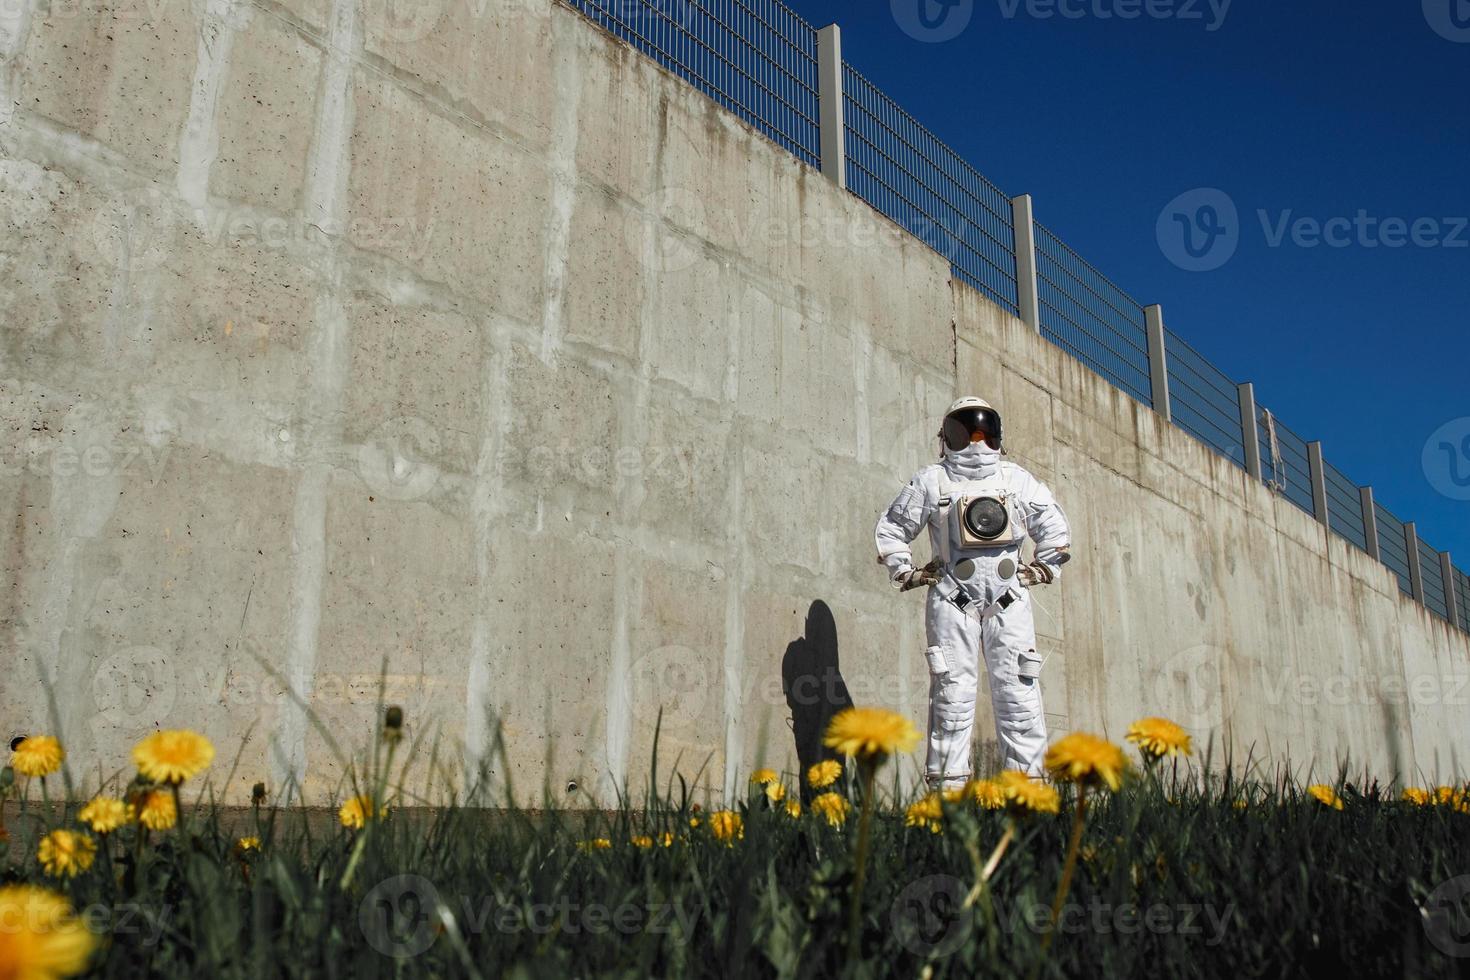 astronauta futurista em um capacete contra paredes cinza foto